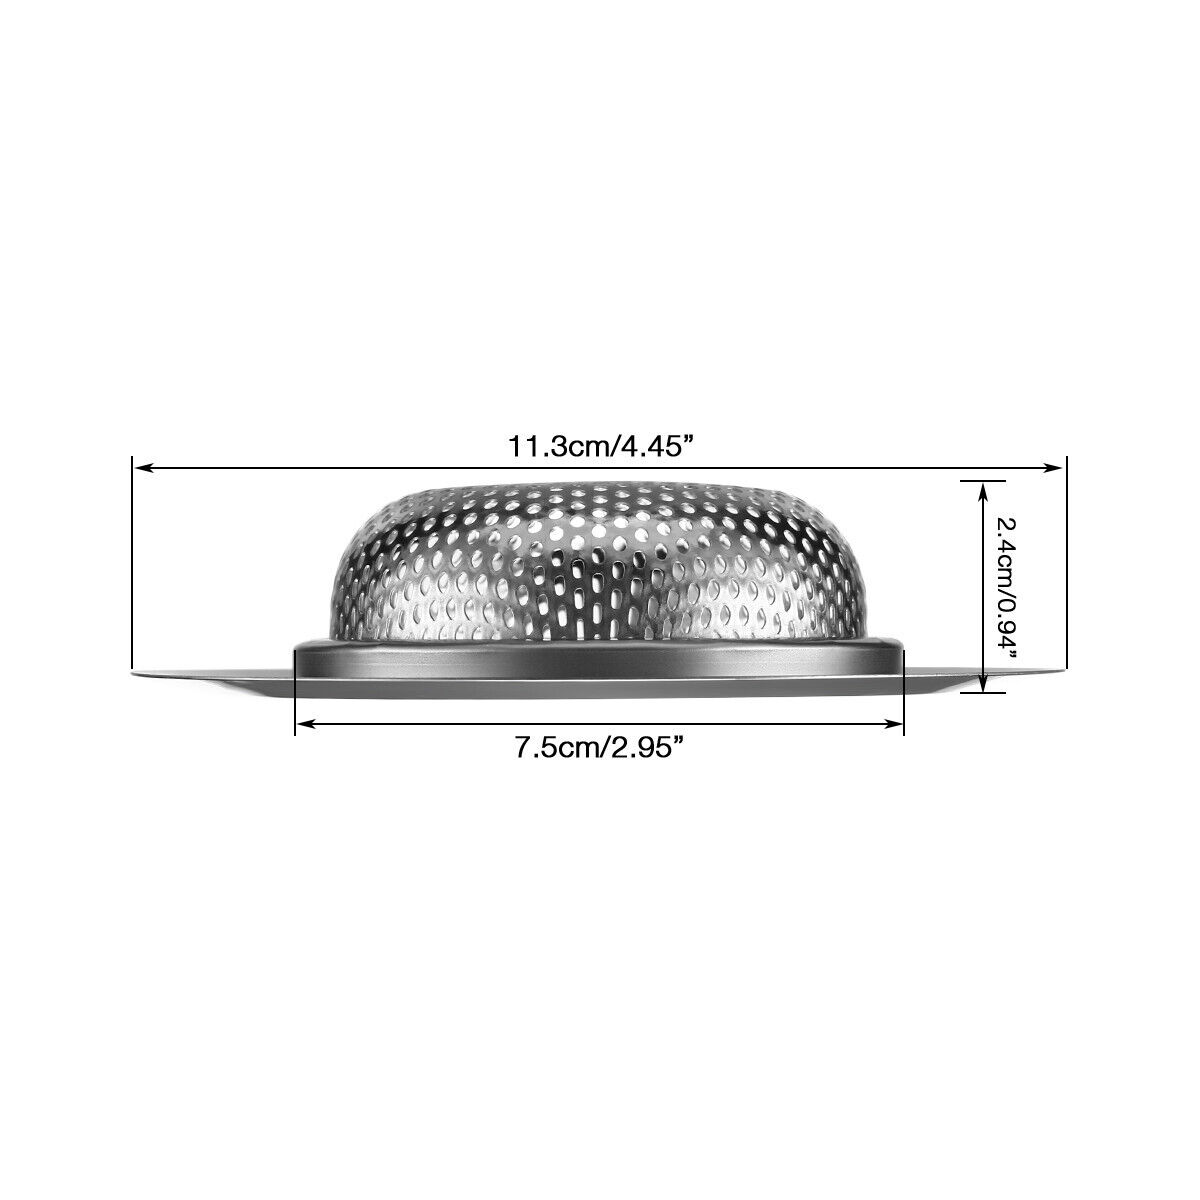 2Pack 4.5" Kitchen Sink Strainer Stopper Stainless Steel Drain Basket Waste Plug Housmile Does not apply - фотография #9